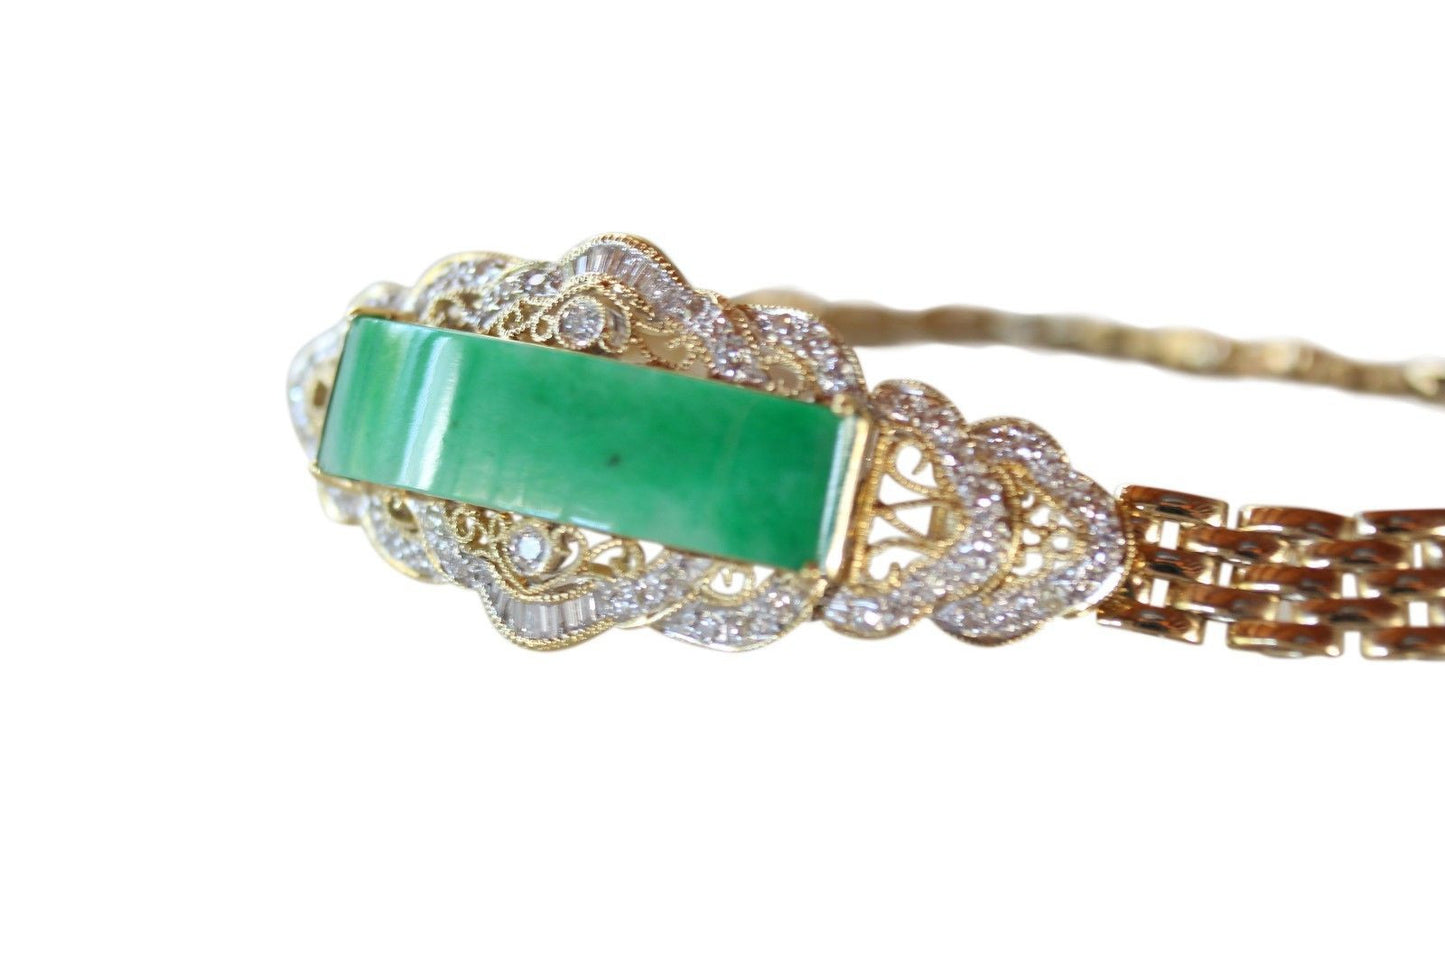 Imperial Jade Jadeite Grade A Untreated 18K Gold Bracelet 0.72ct Diamonds 6.75in